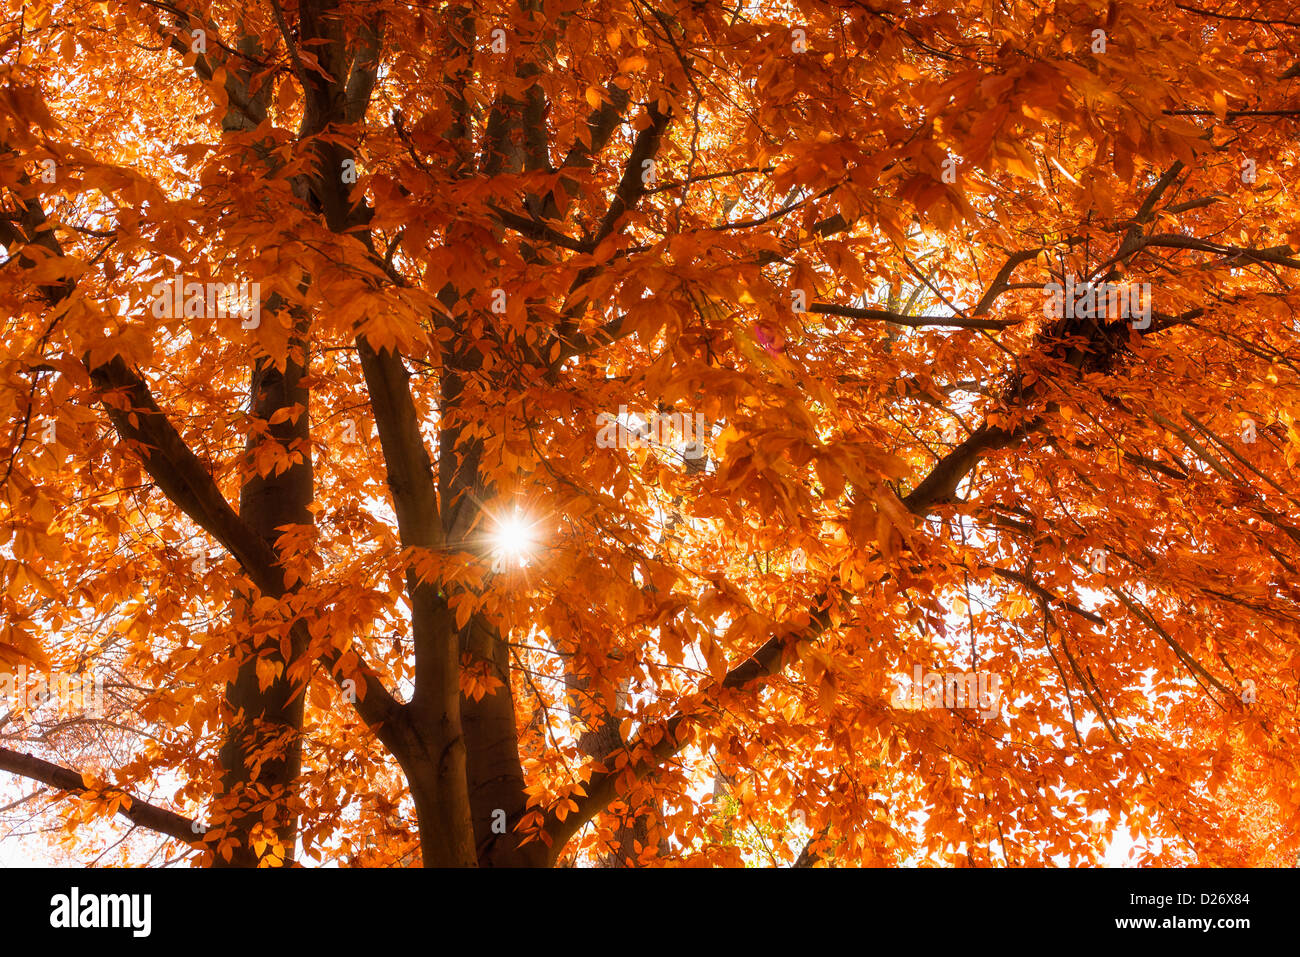 USA, North Carolina, Autumn leaves on tree Stock Photo